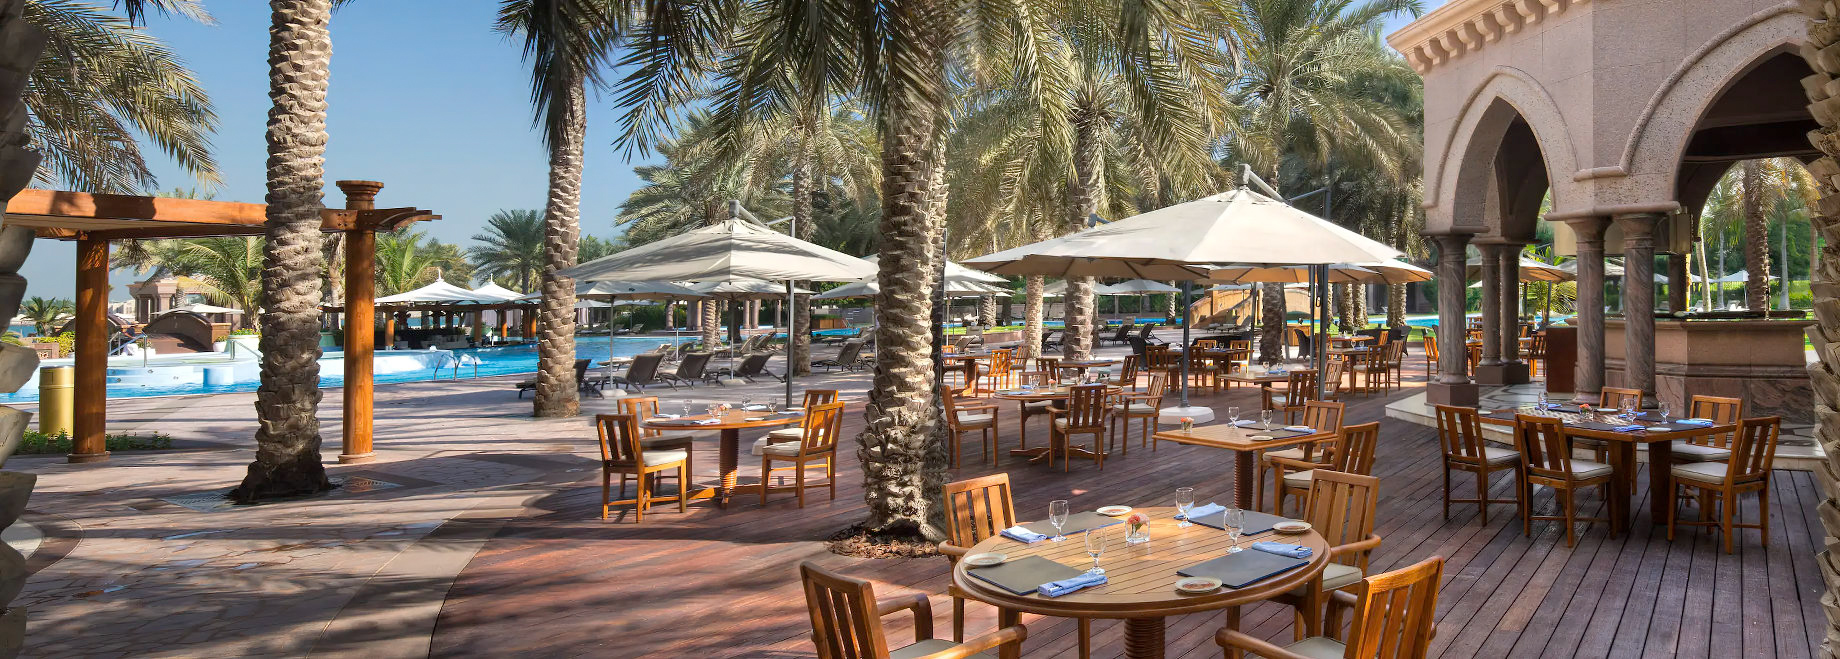 Emirates Palace Abu Dhabi Hotel – Abu Dhabi, UAE – Dining Las Brisas Patio